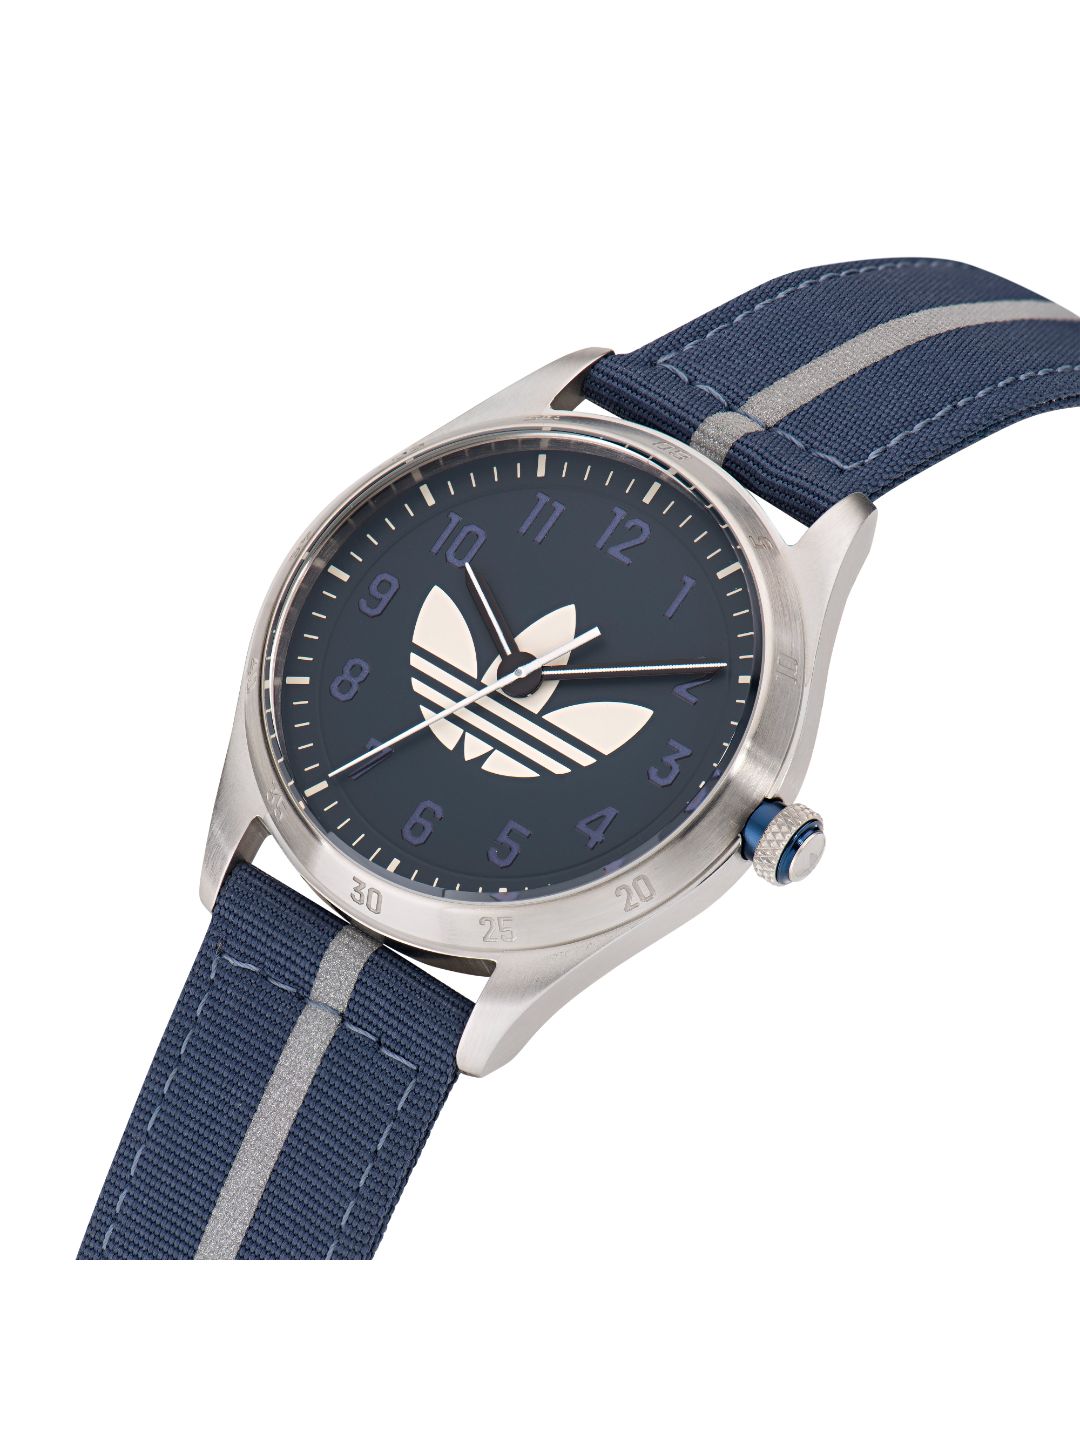 Adidas Originals Blue Dial Unisex Watch - AOSY23041